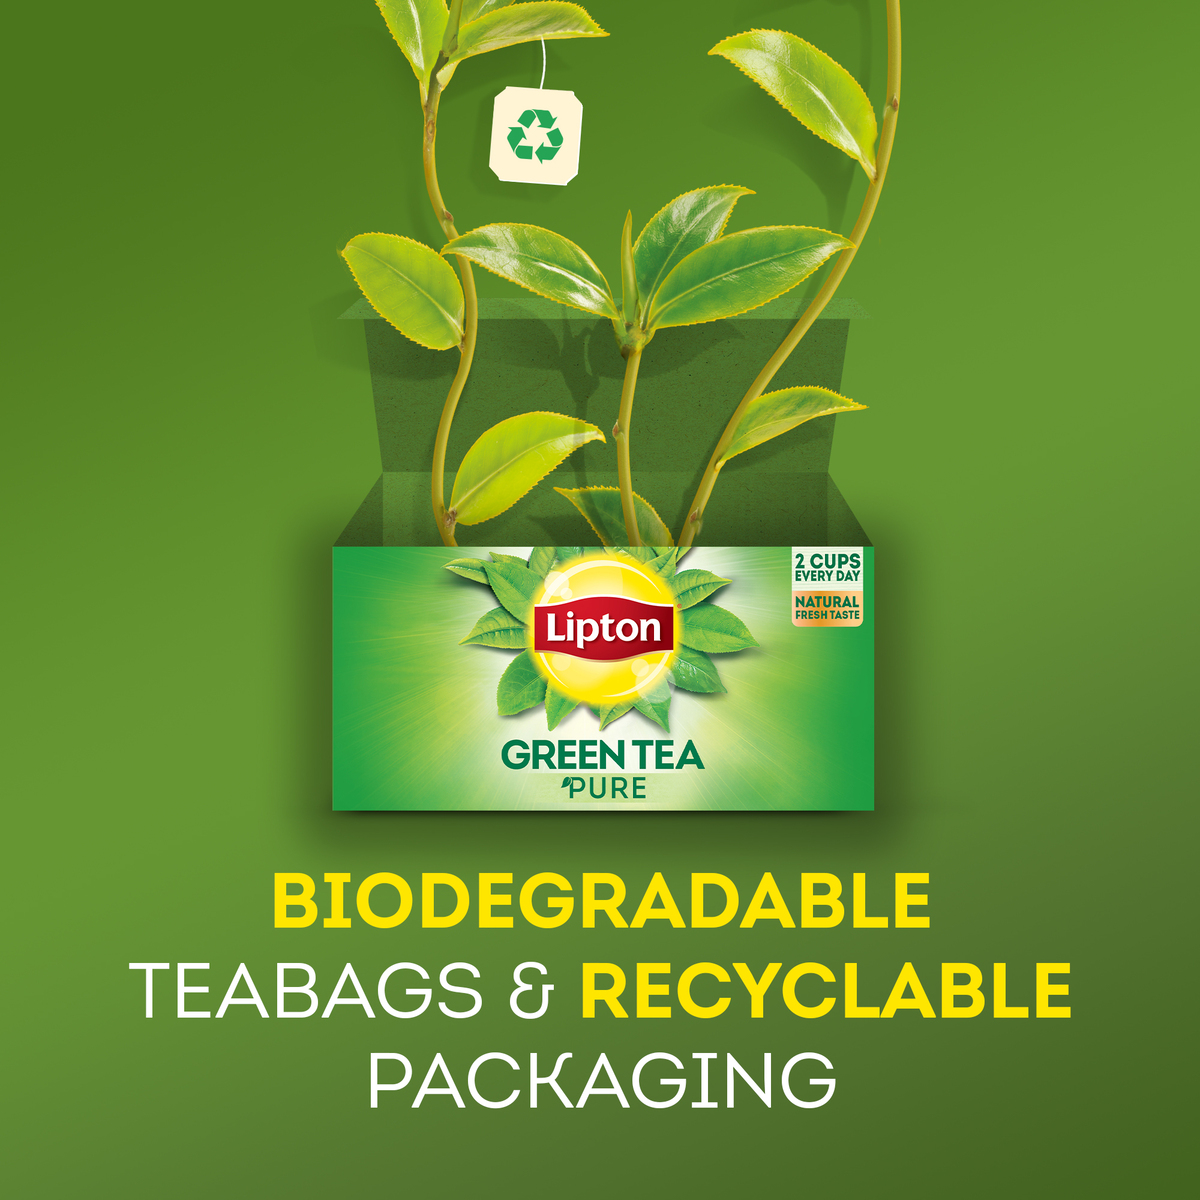 Lipton Green Tea Lemon Envelope 50 Teabags